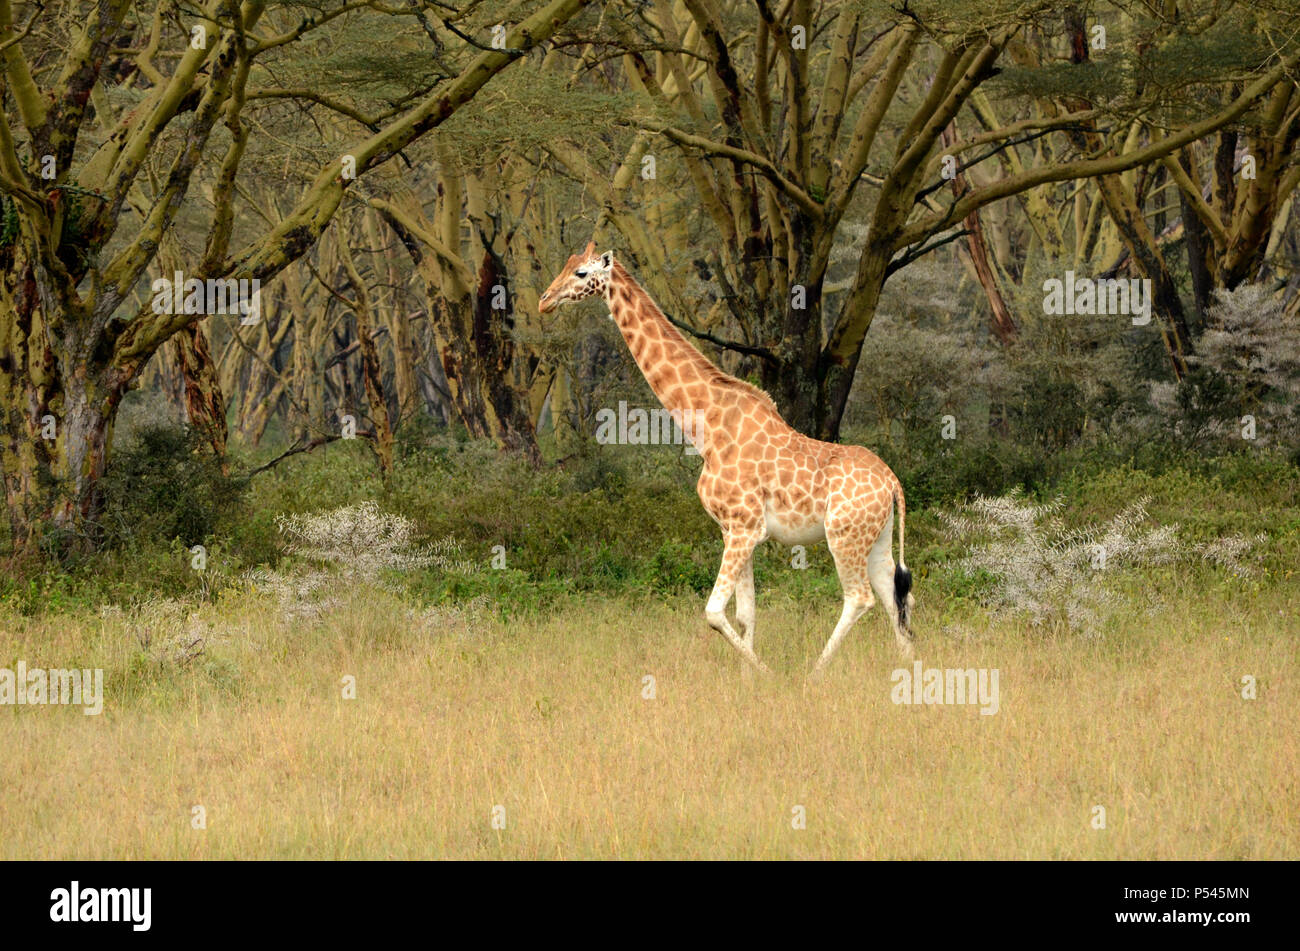 Balades girafe dans les prairies et des forêts du parc national du lac Nakuru, Kenya, Africa Banque D'Images